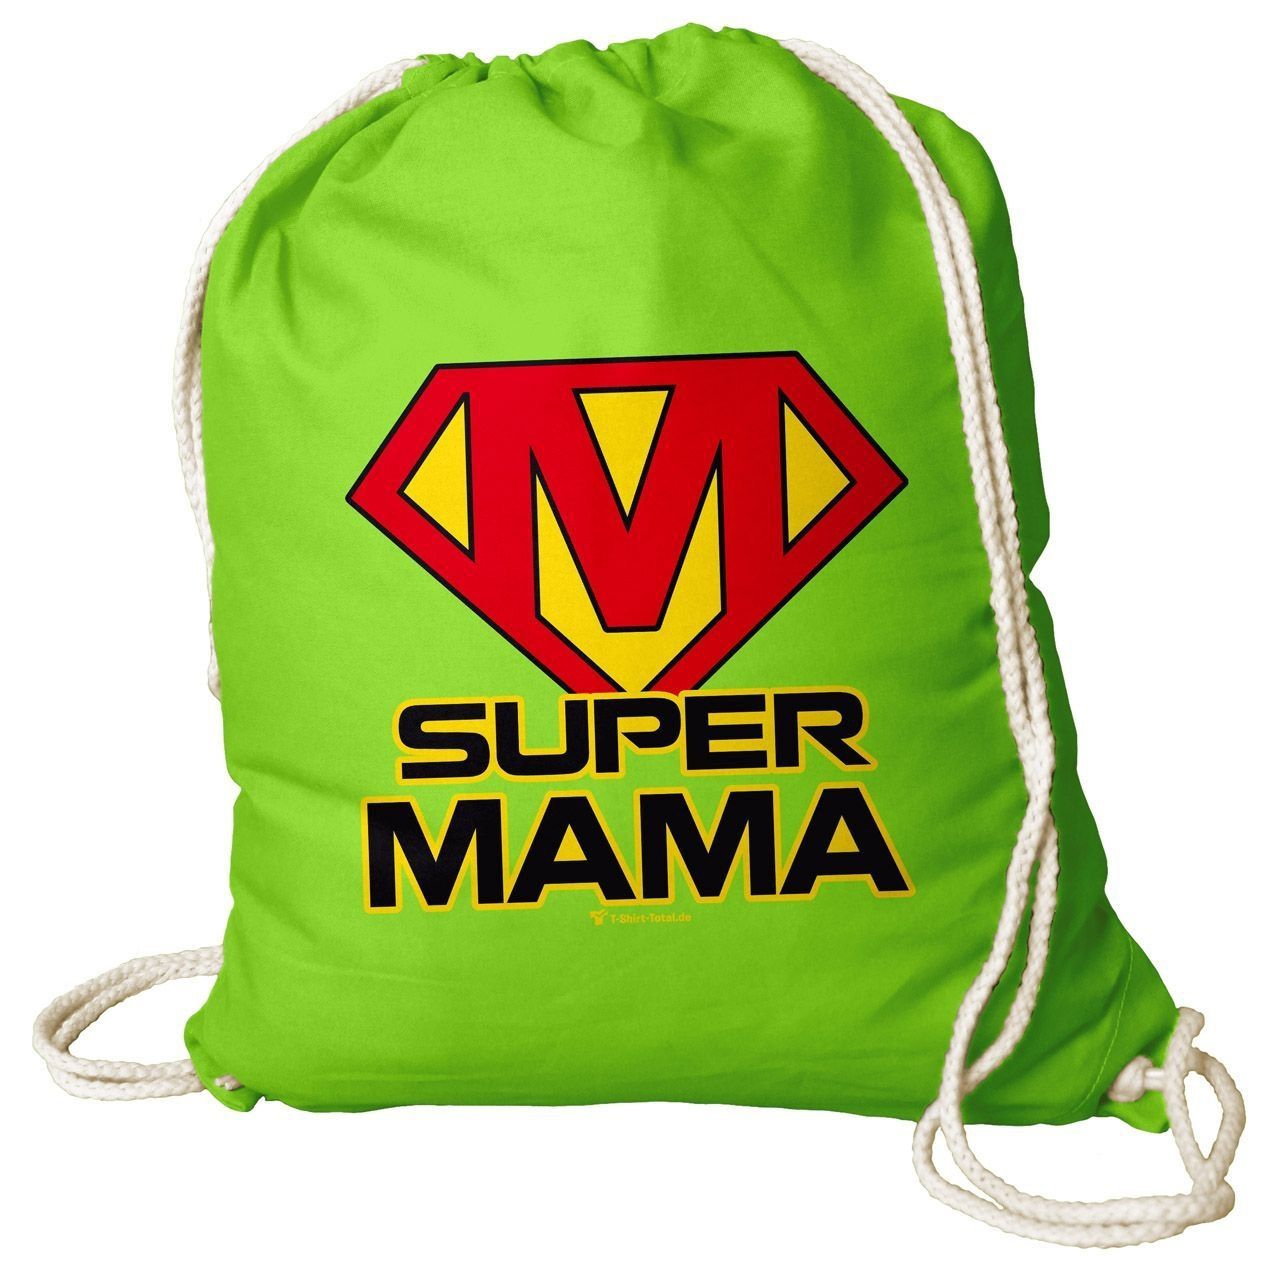 Super Mama Rucksack Beutel hellgrün